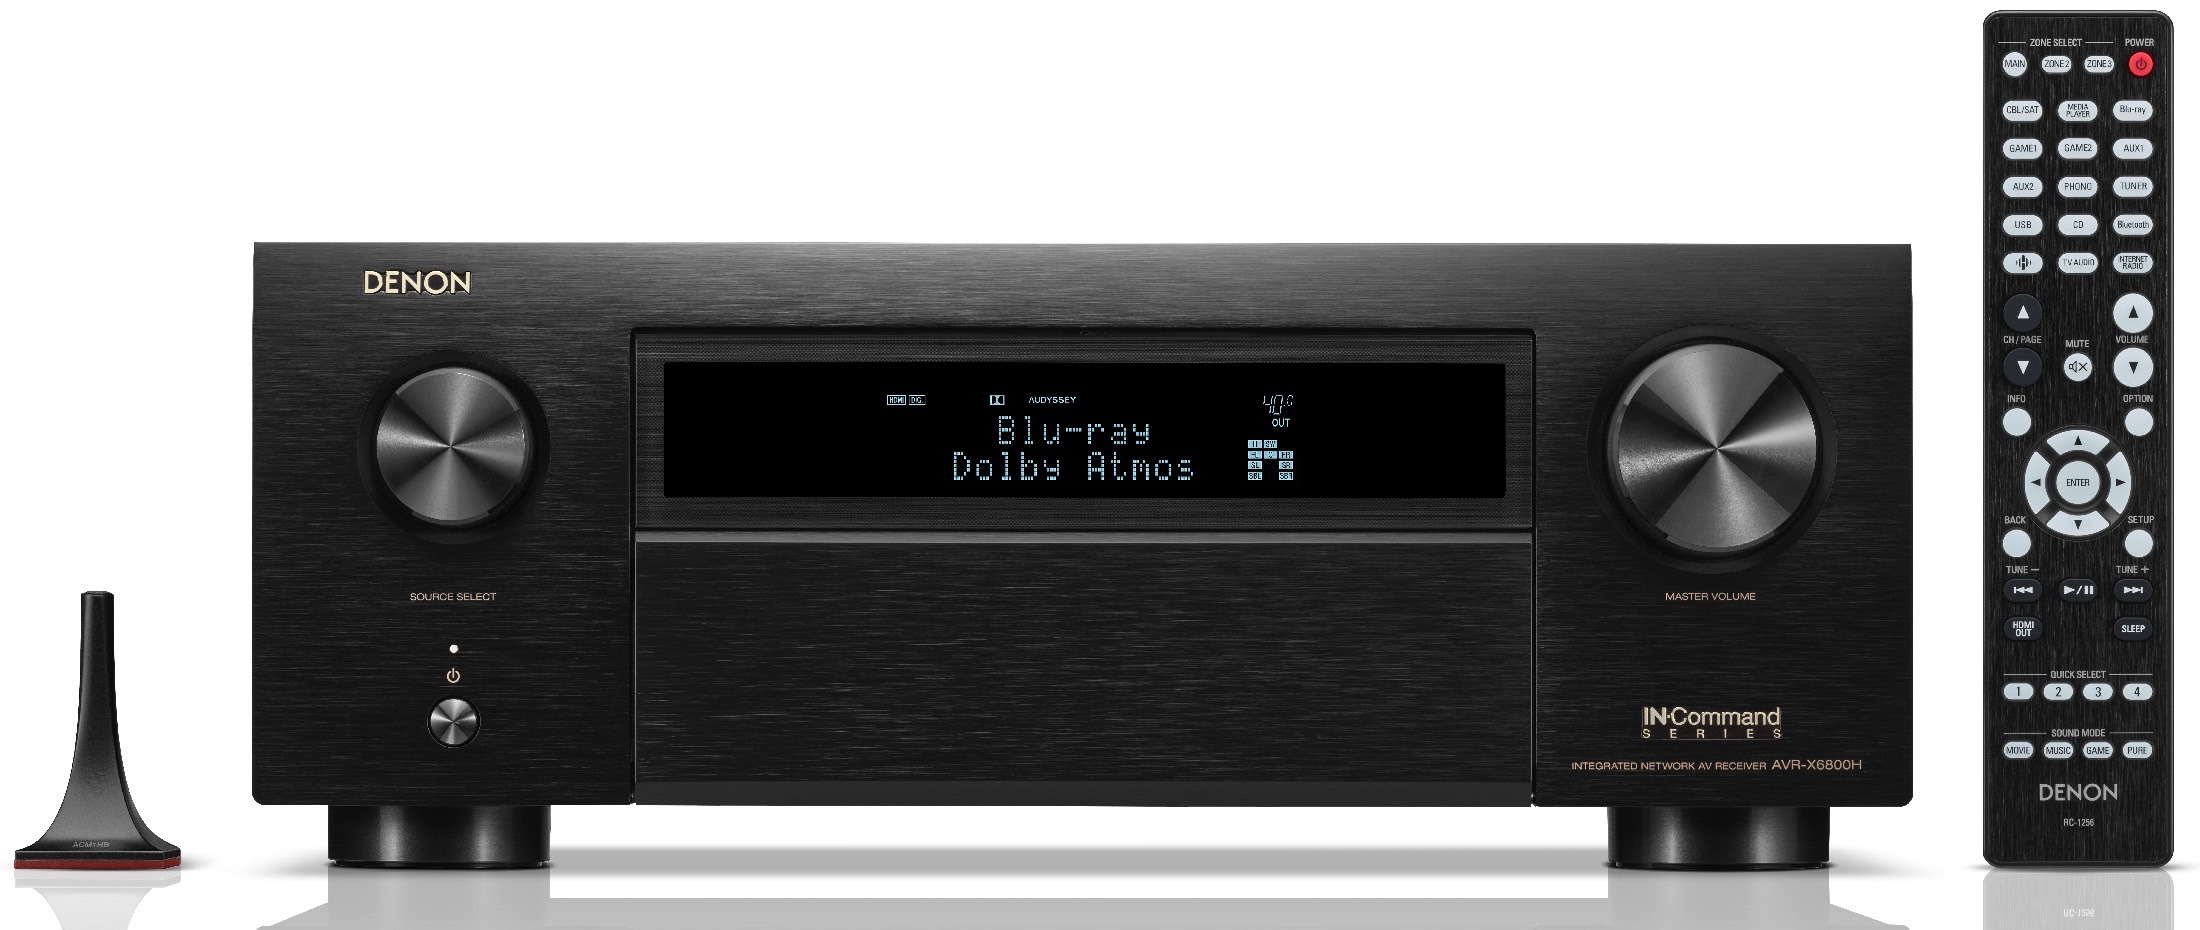 Receptor AVR AVR-X6800H de Denon con micrófono y mando a distancia.